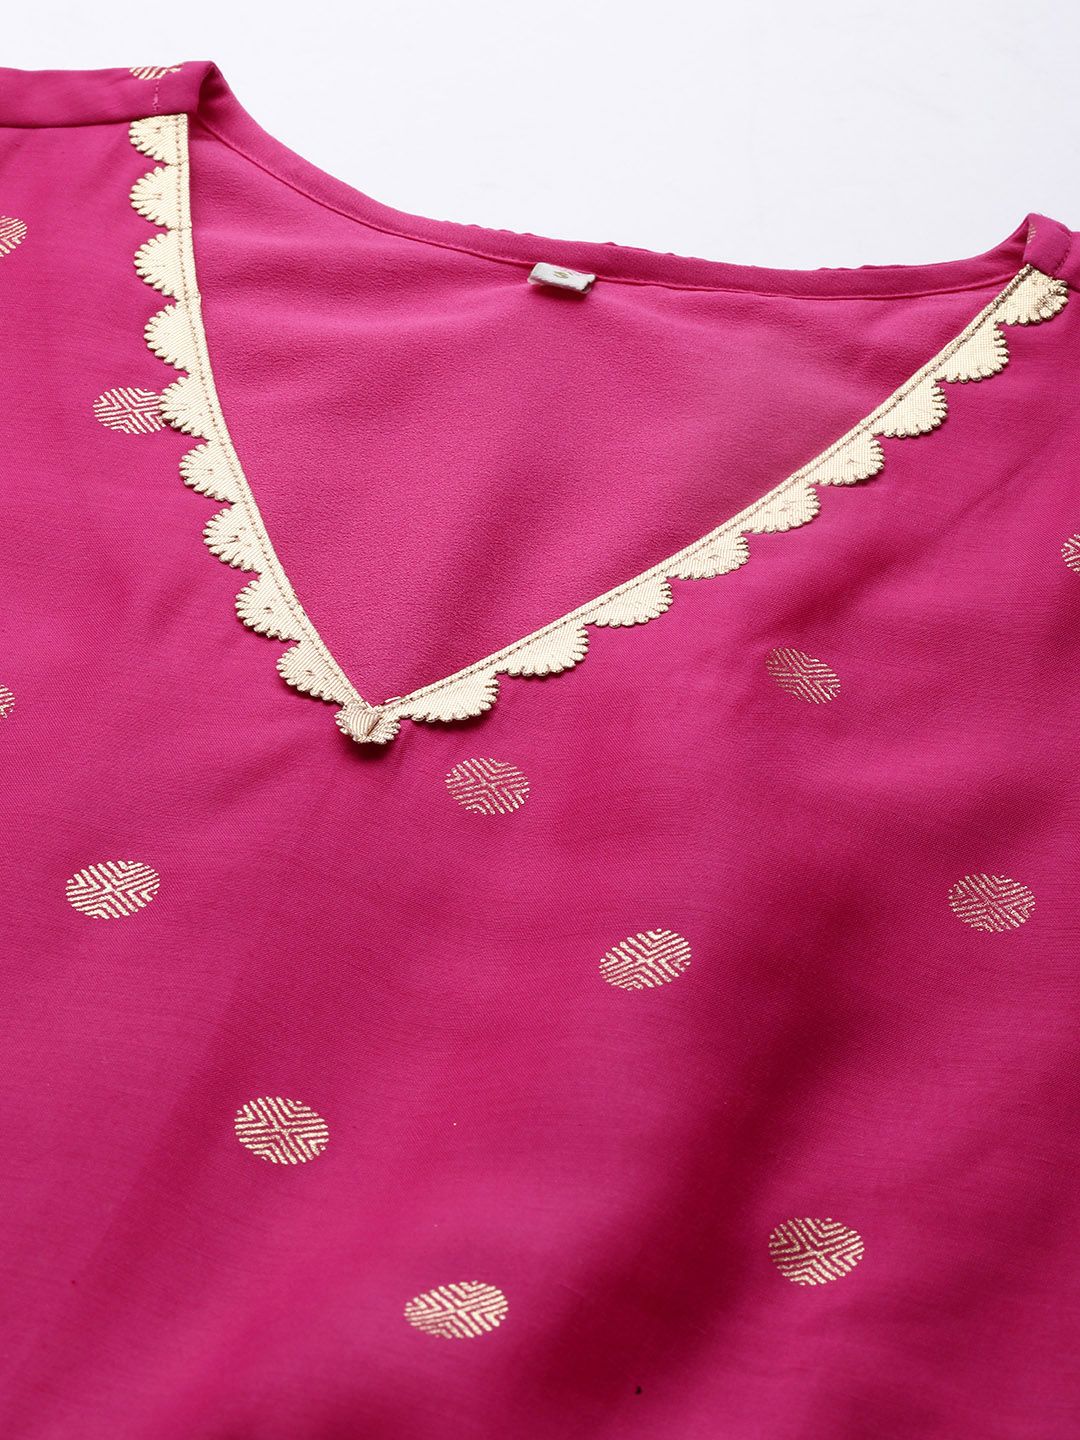 Pink Chanderi Gold Foil Print Dress